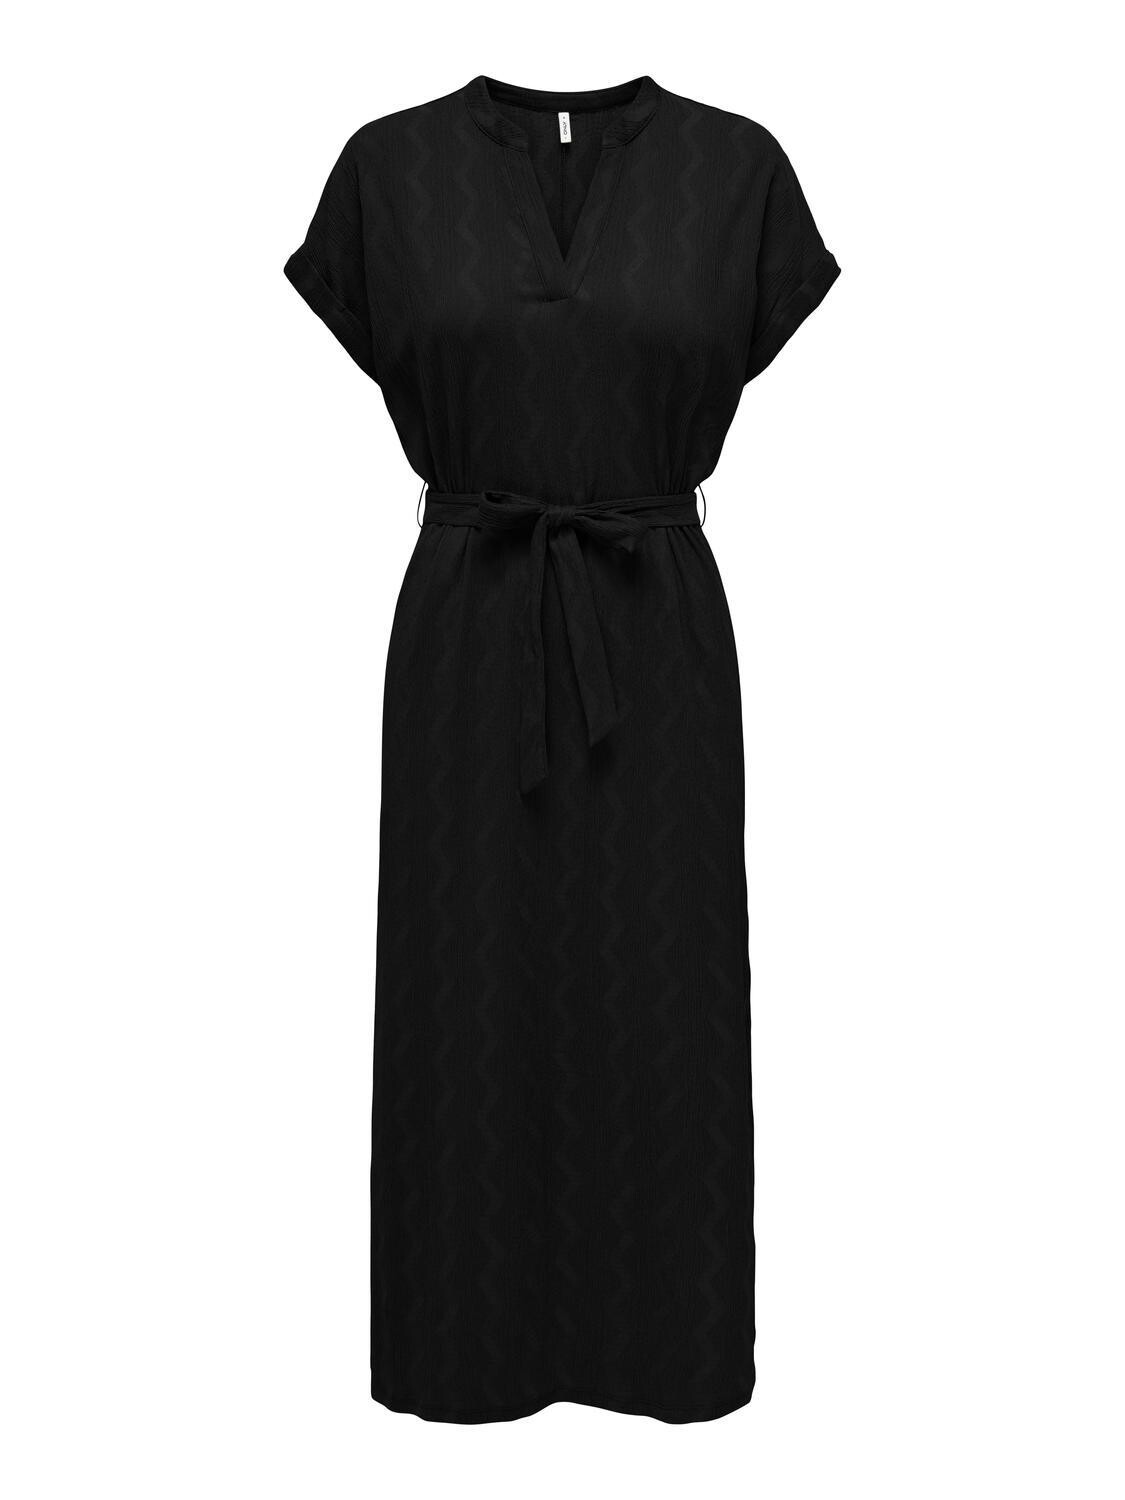 ONLDIA S/S V-NECK DRESS JRS Black